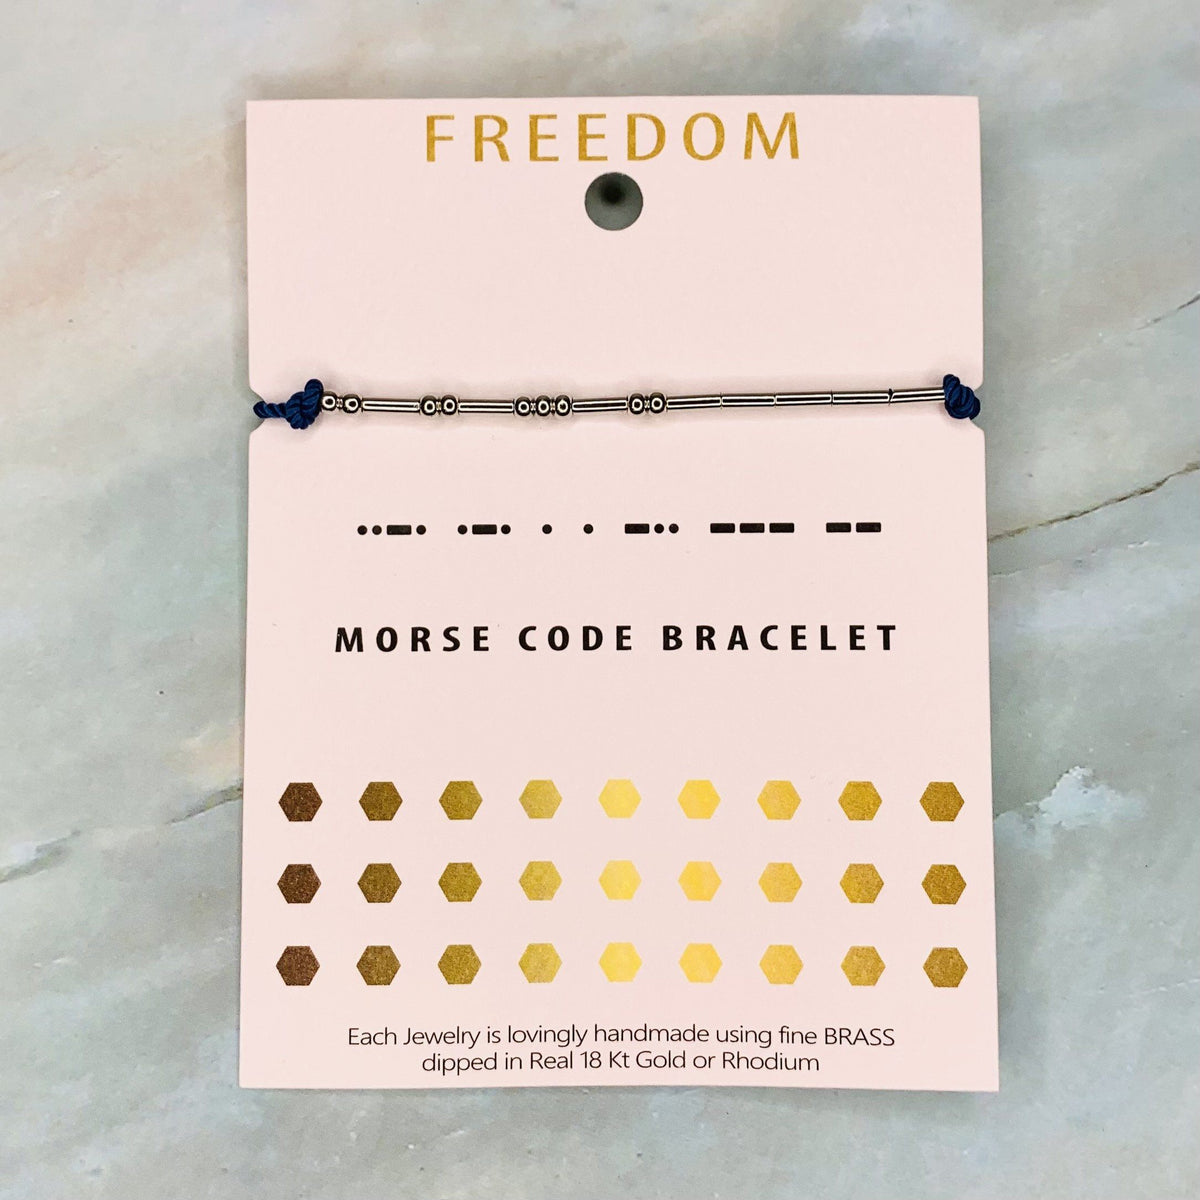 Morse Code Bracelet Jewelry Lauren-Spencer Freedom 